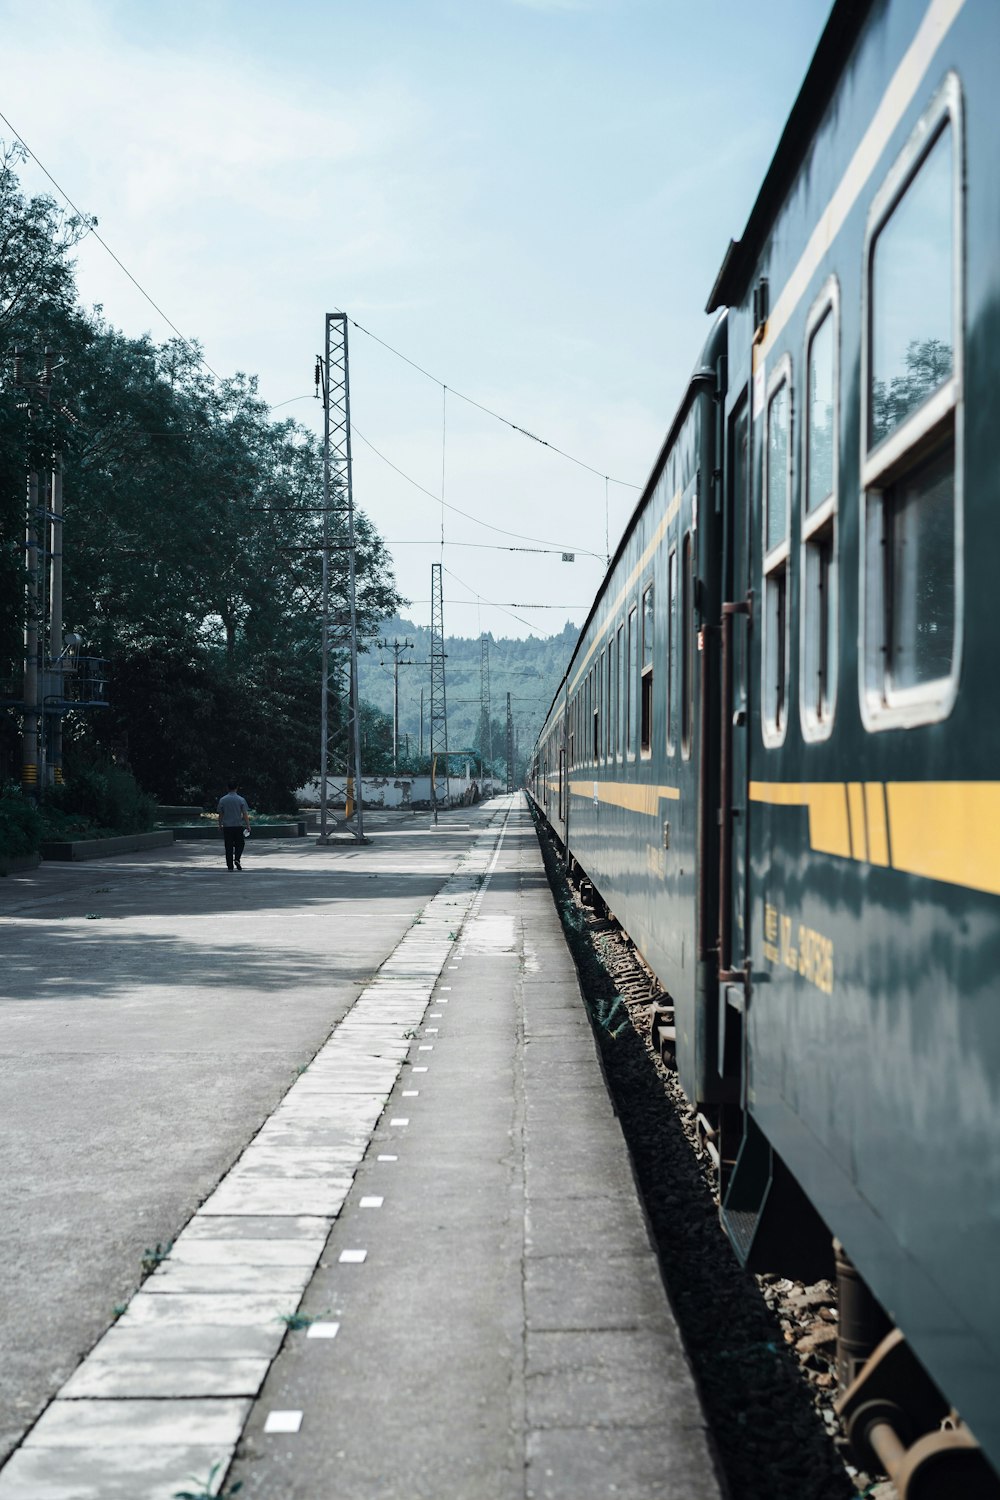 yellow and black train on rail road photo – Free Train Image on Unsplash